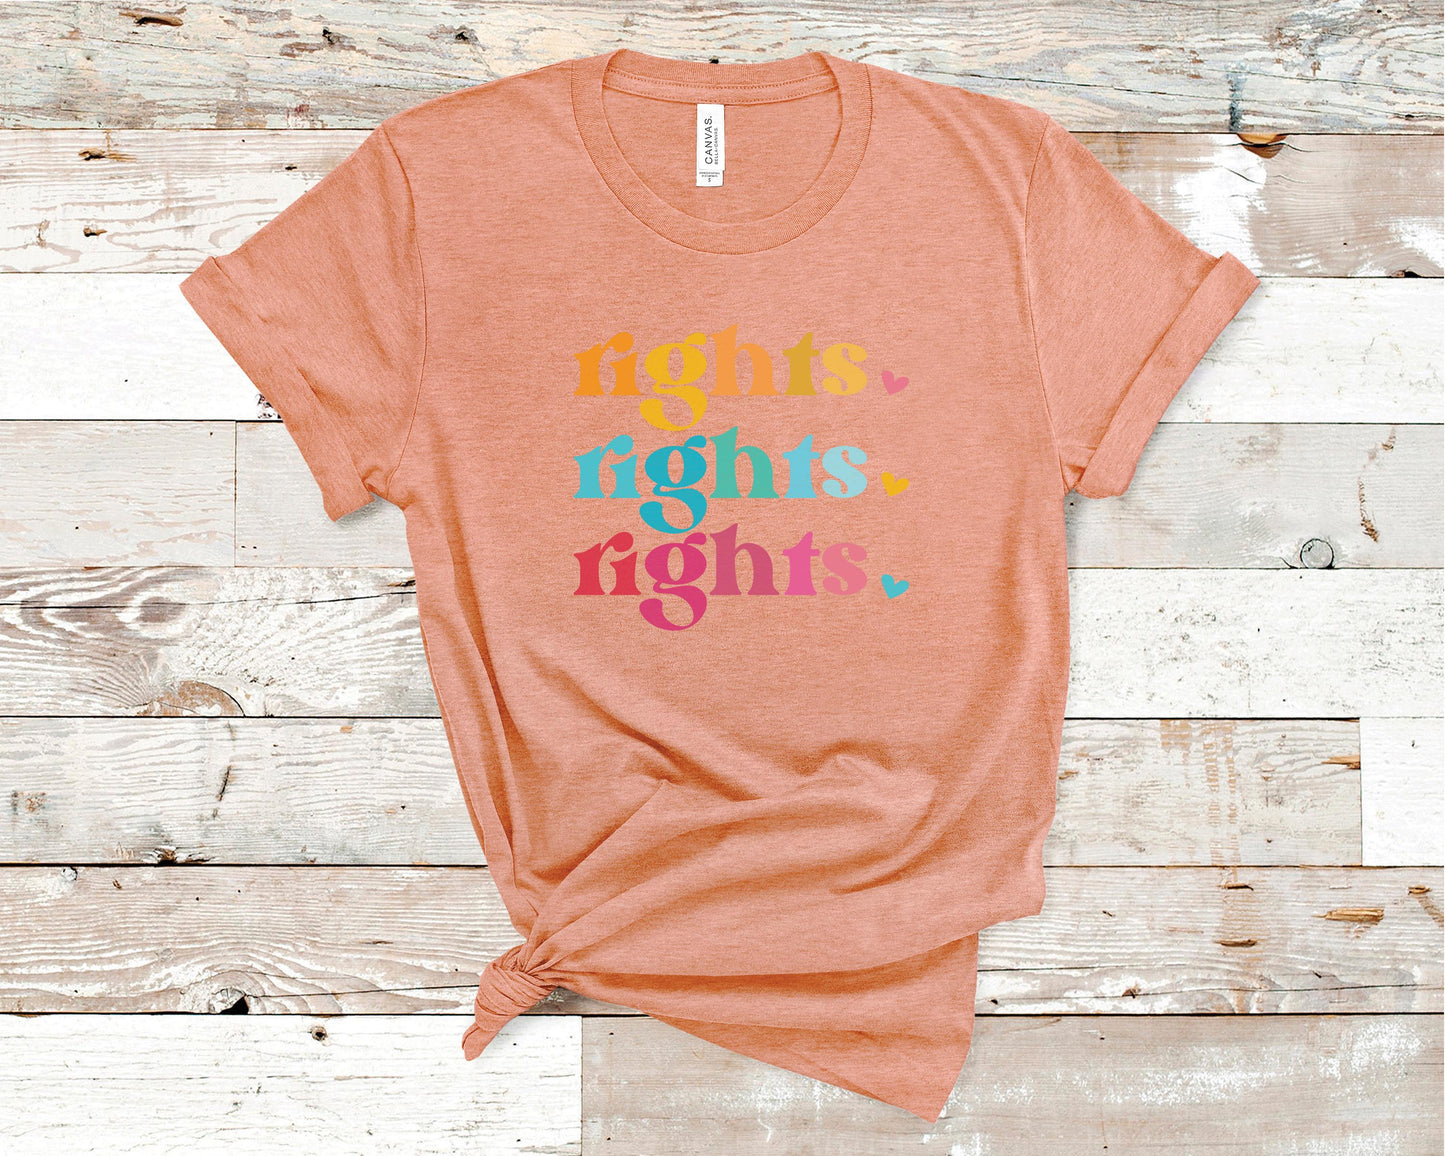 Rights Rights Rights - LGBTQ